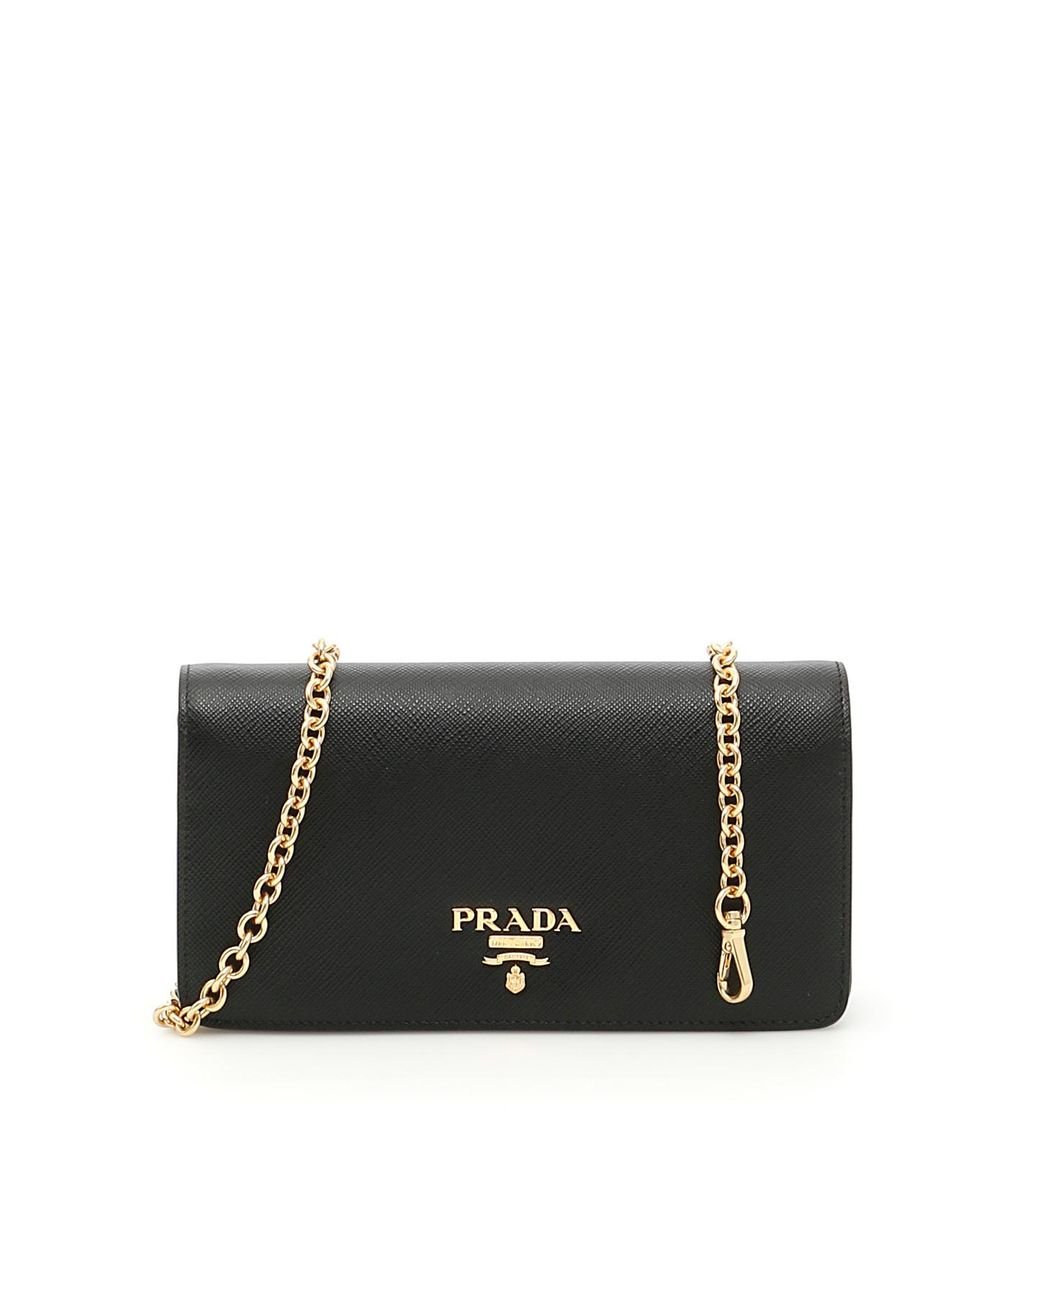 Prada Wallet On Chain in Black | Lyst